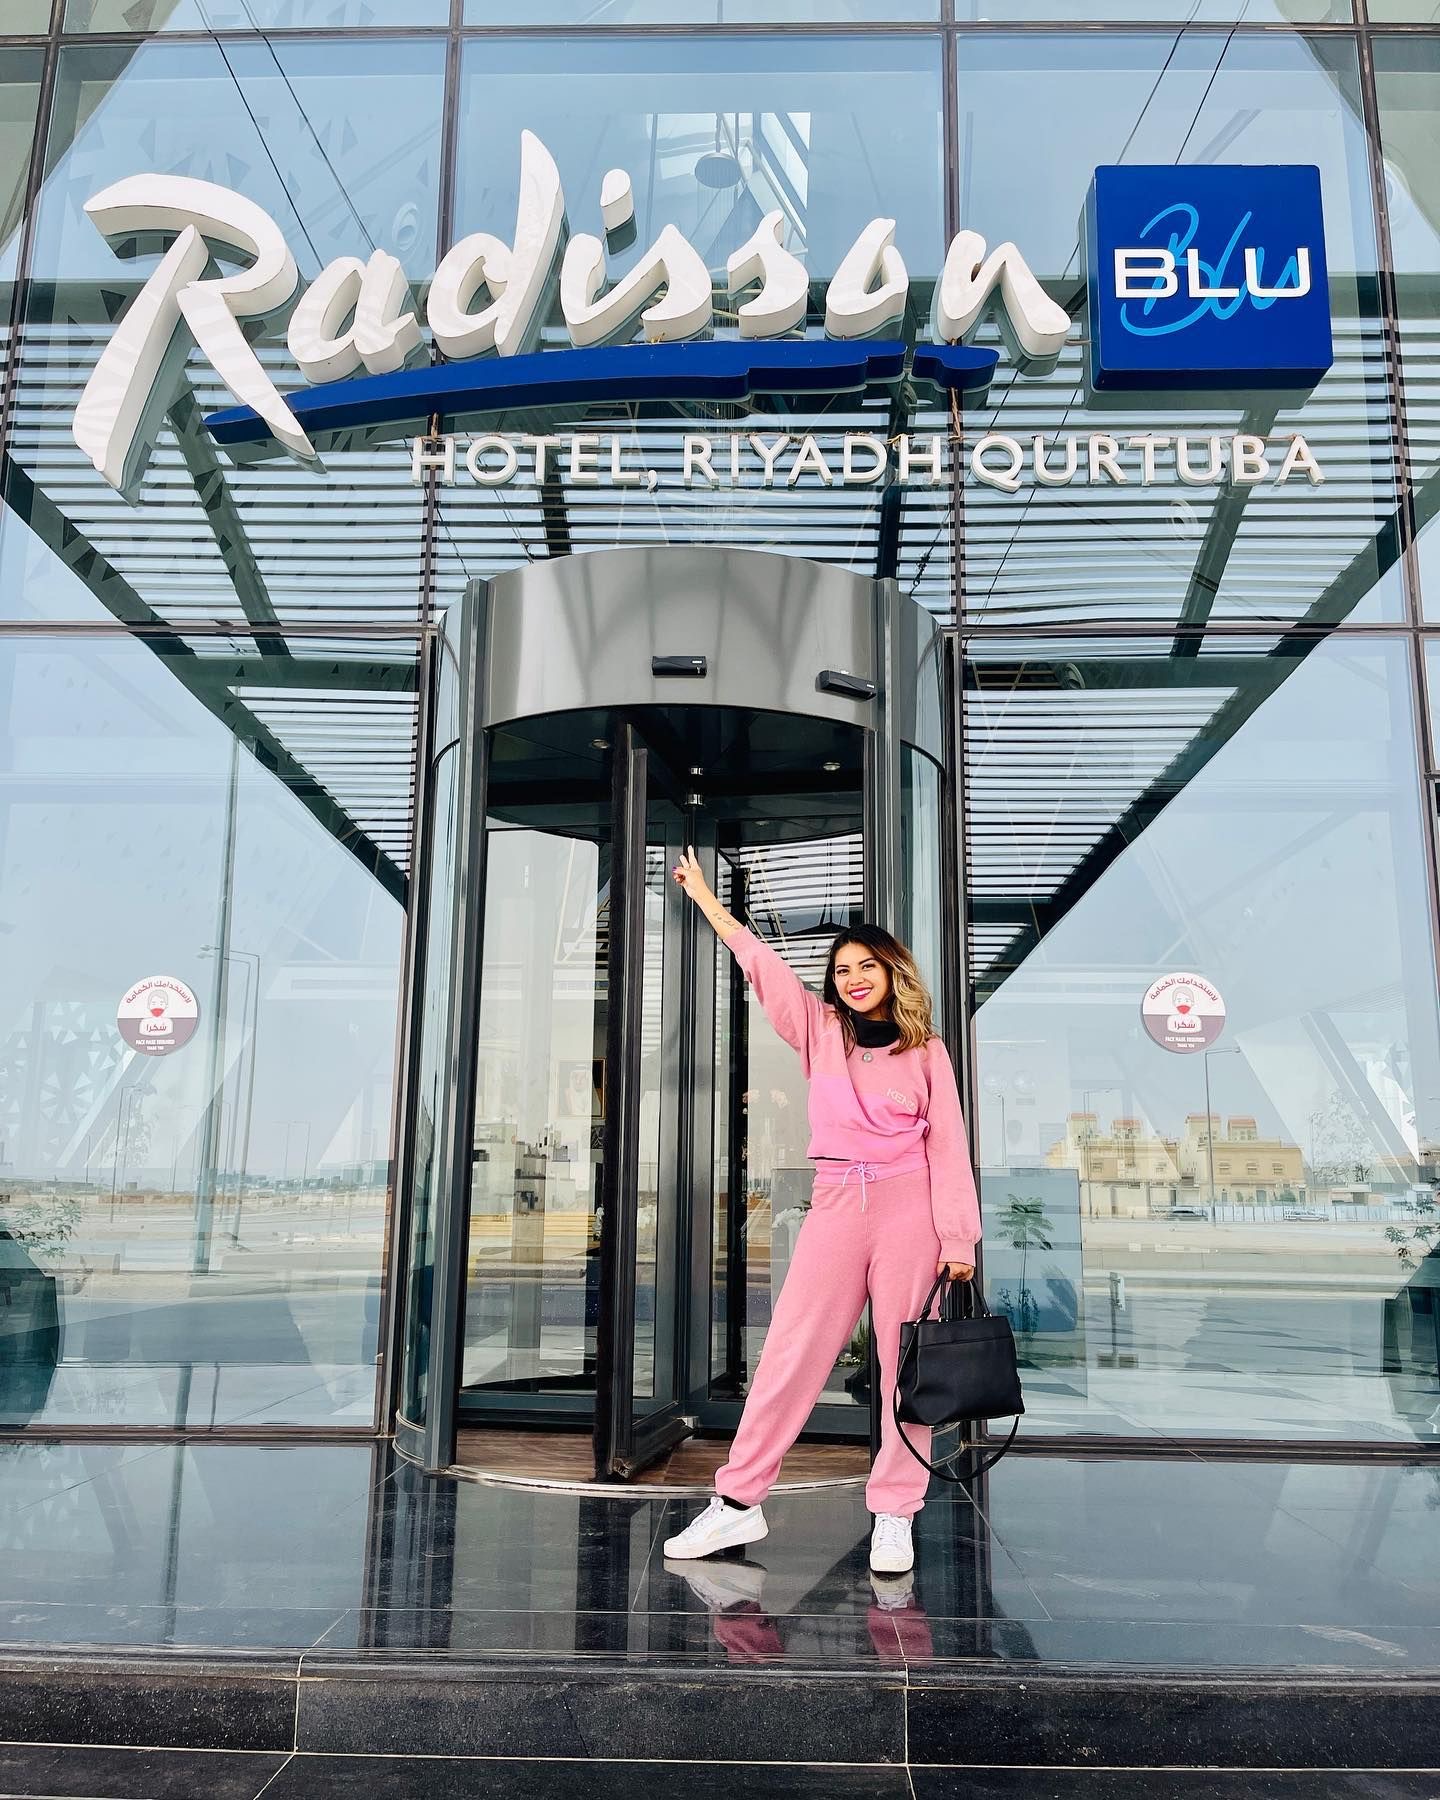 Radisson Blu Hotel, Riyadh Kurtuba Visiting my 171st country!